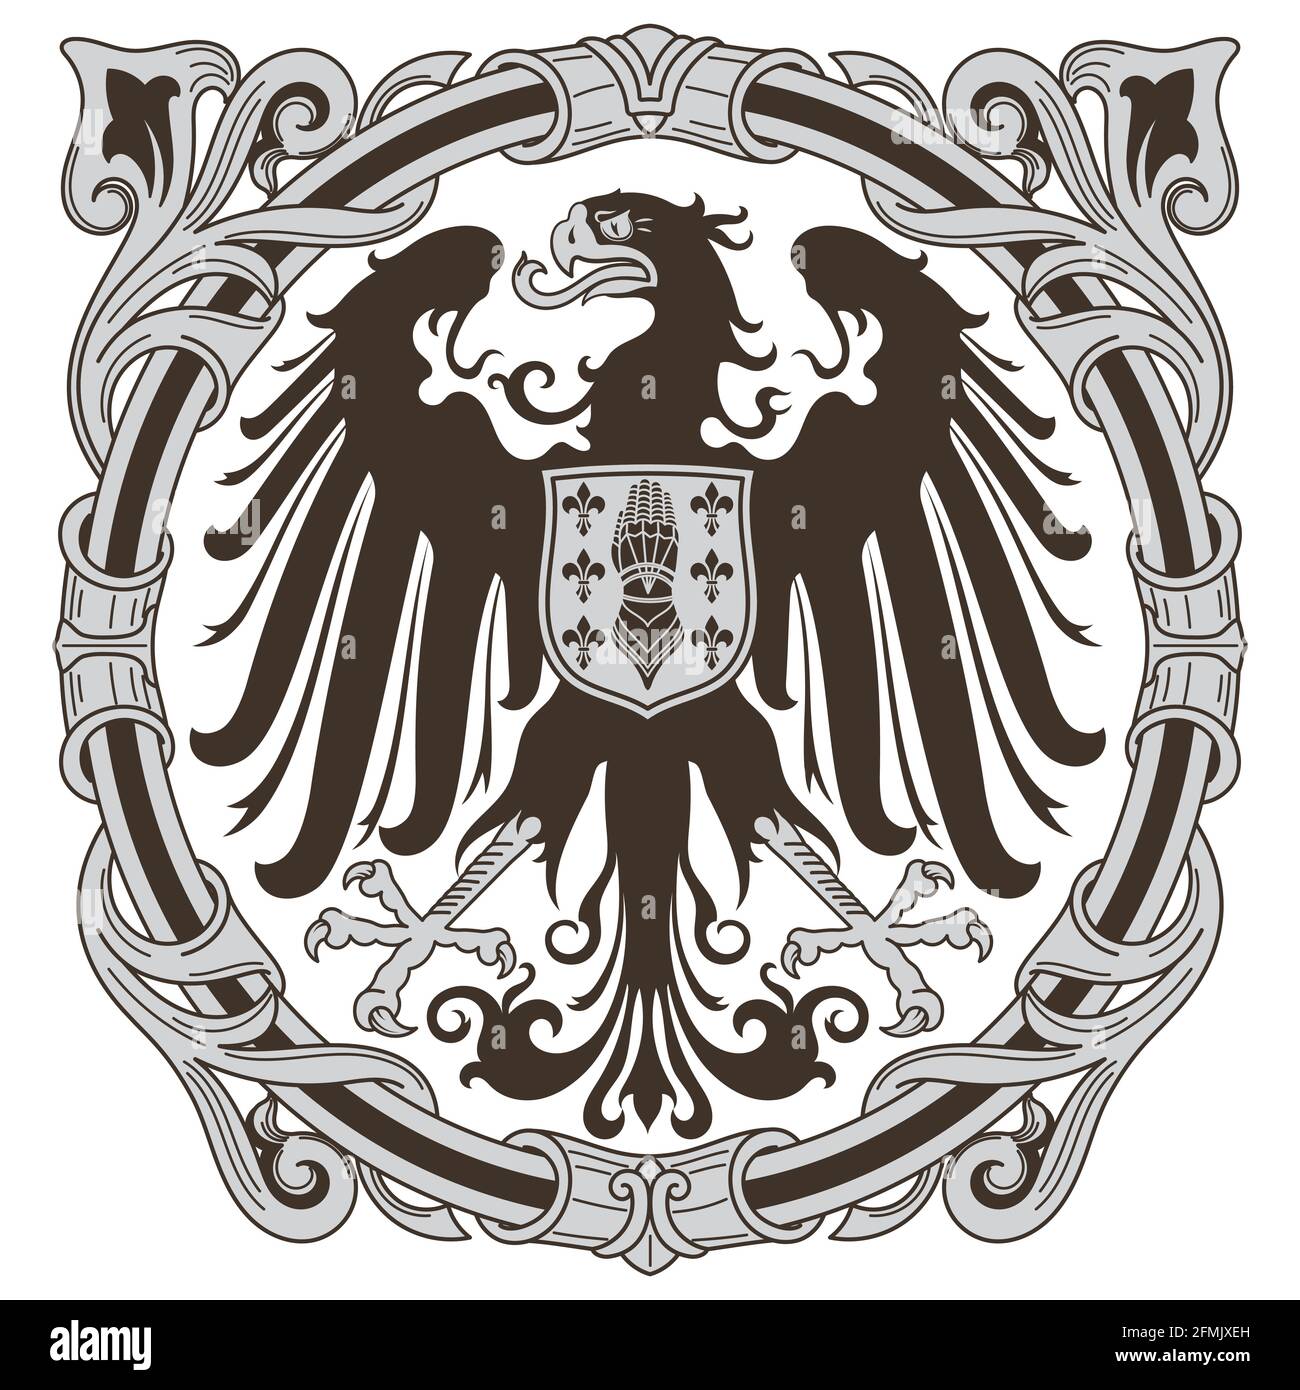 Mittelalterliches Wappentier-Design, Wappadler, Ritterschild, floraler Ornament Stock Vektor